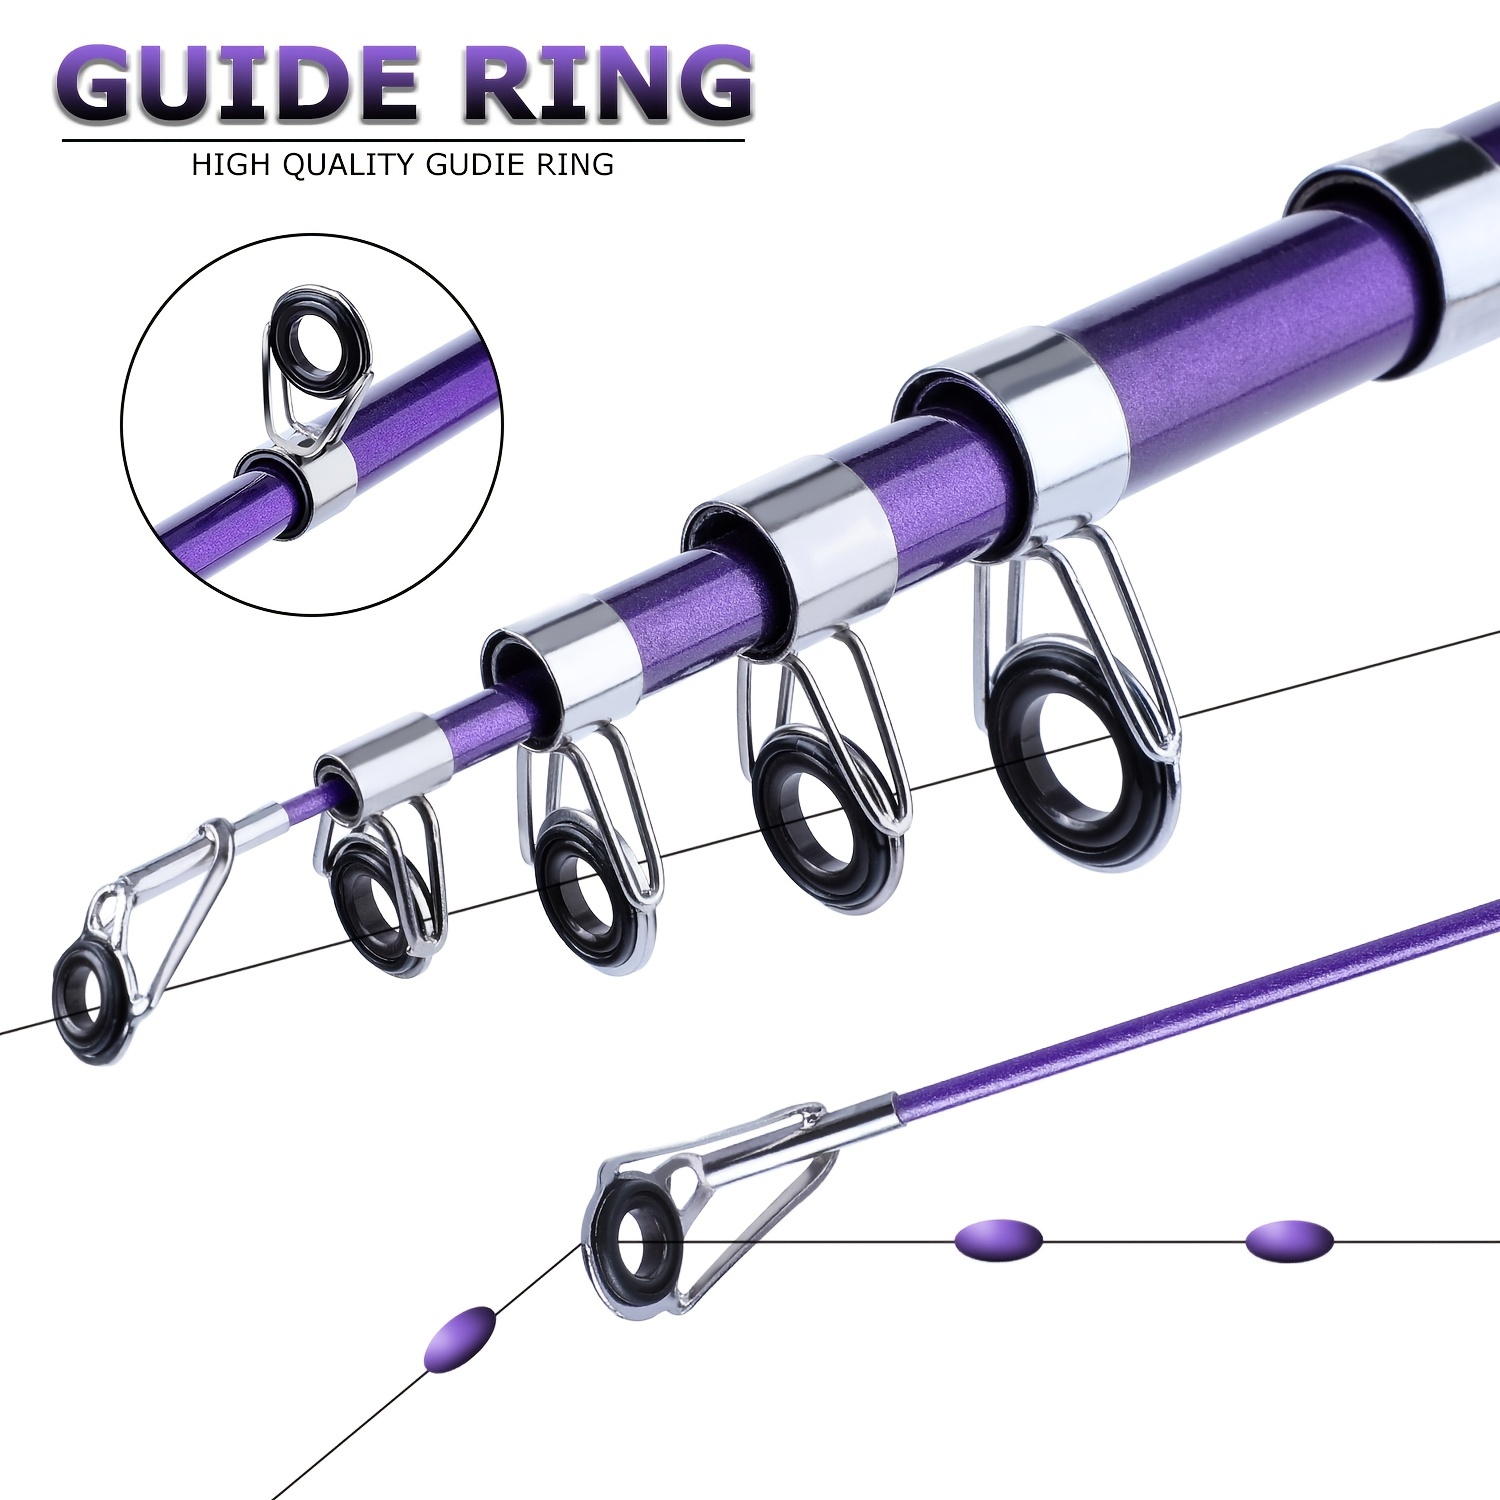 Sougayilang Telescopic Fishing Rod: Portable Compact Design - Temu